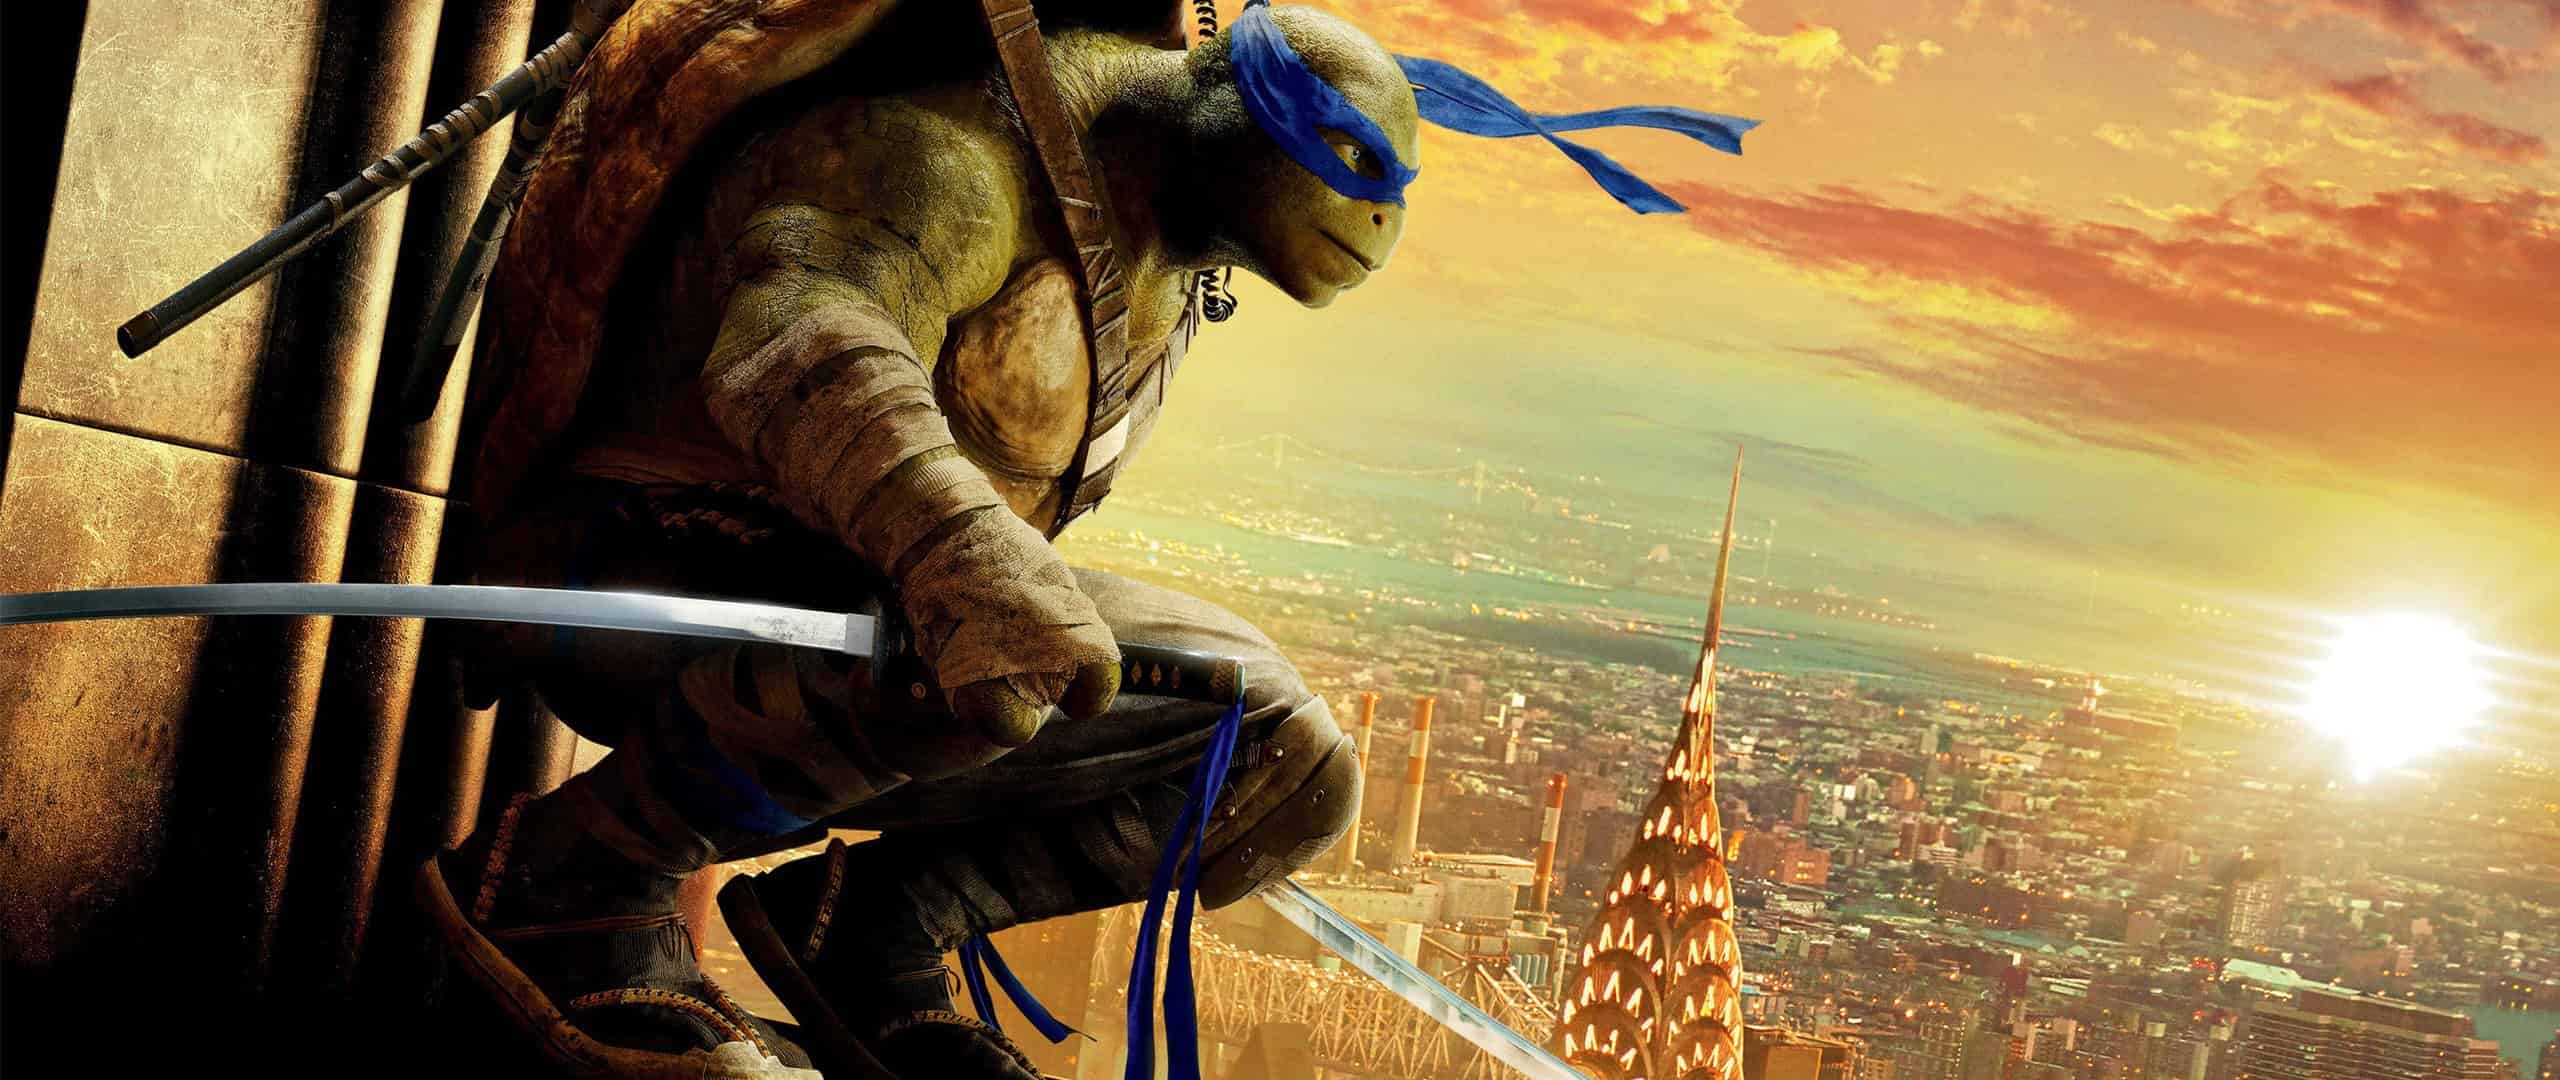 Teenage Mutant Ninja Turtles Out of the Shadows 4K 2016 big poster